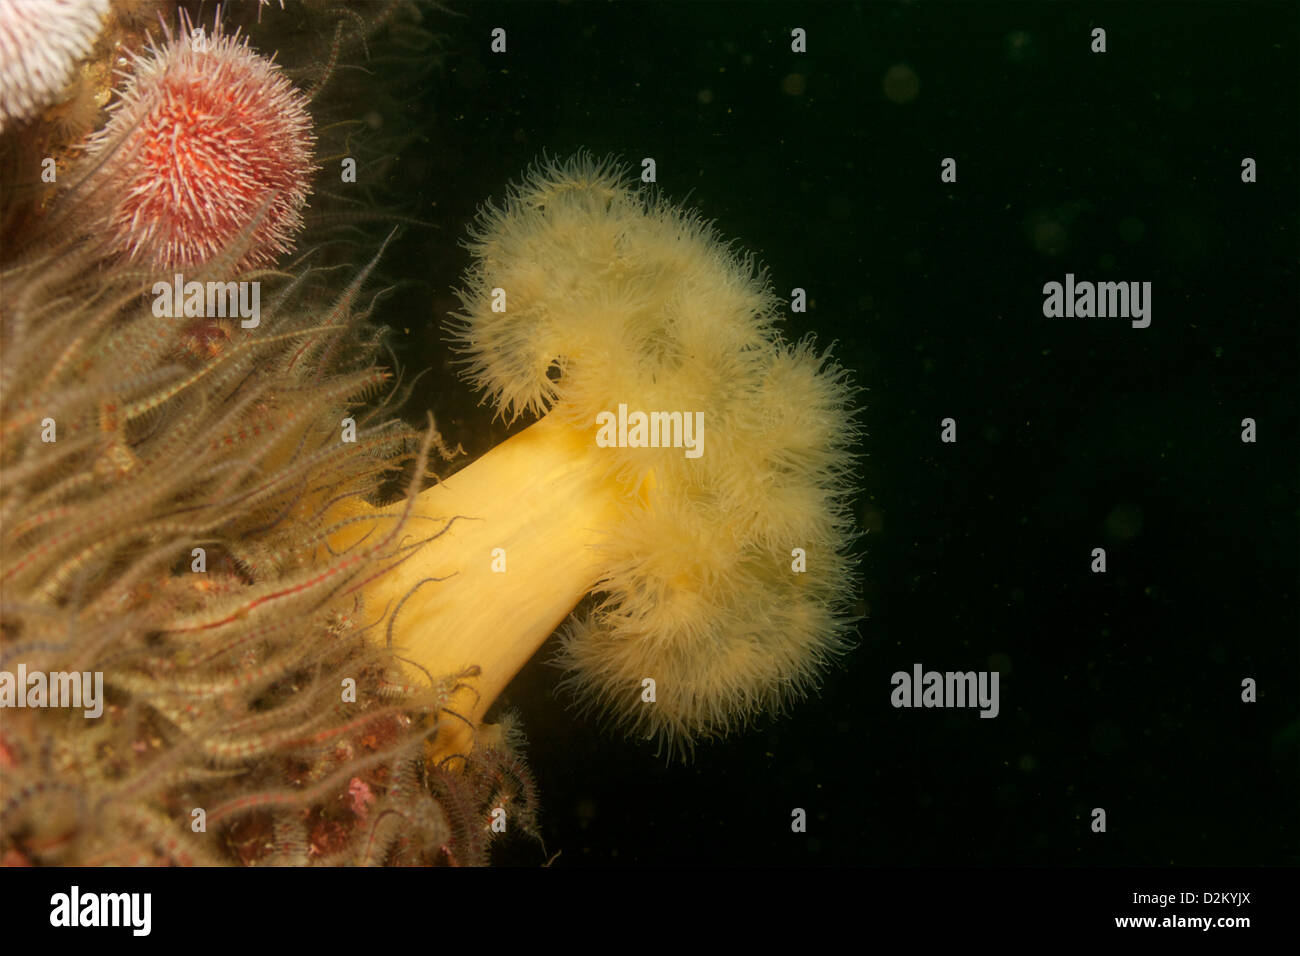 Plumose anemone - Metridium - photographed at St Abb's marine nature reserve Stock Photo